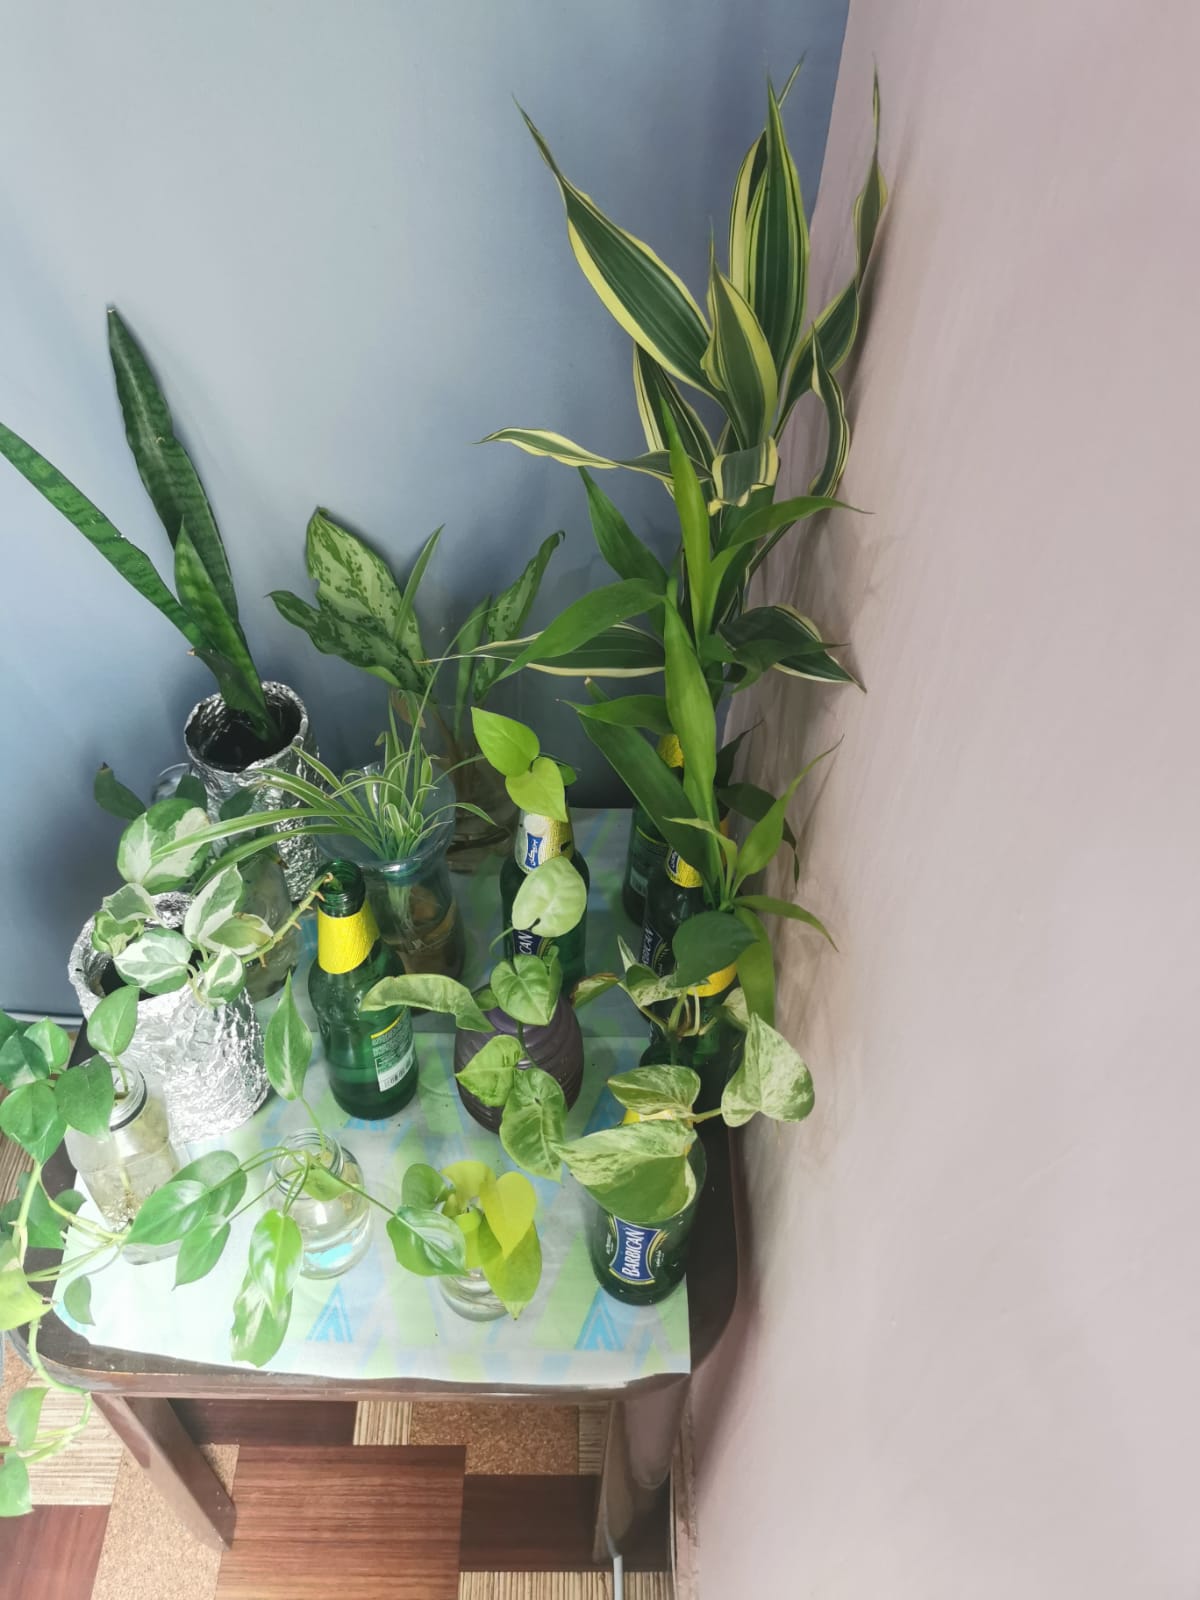 Plants & pots